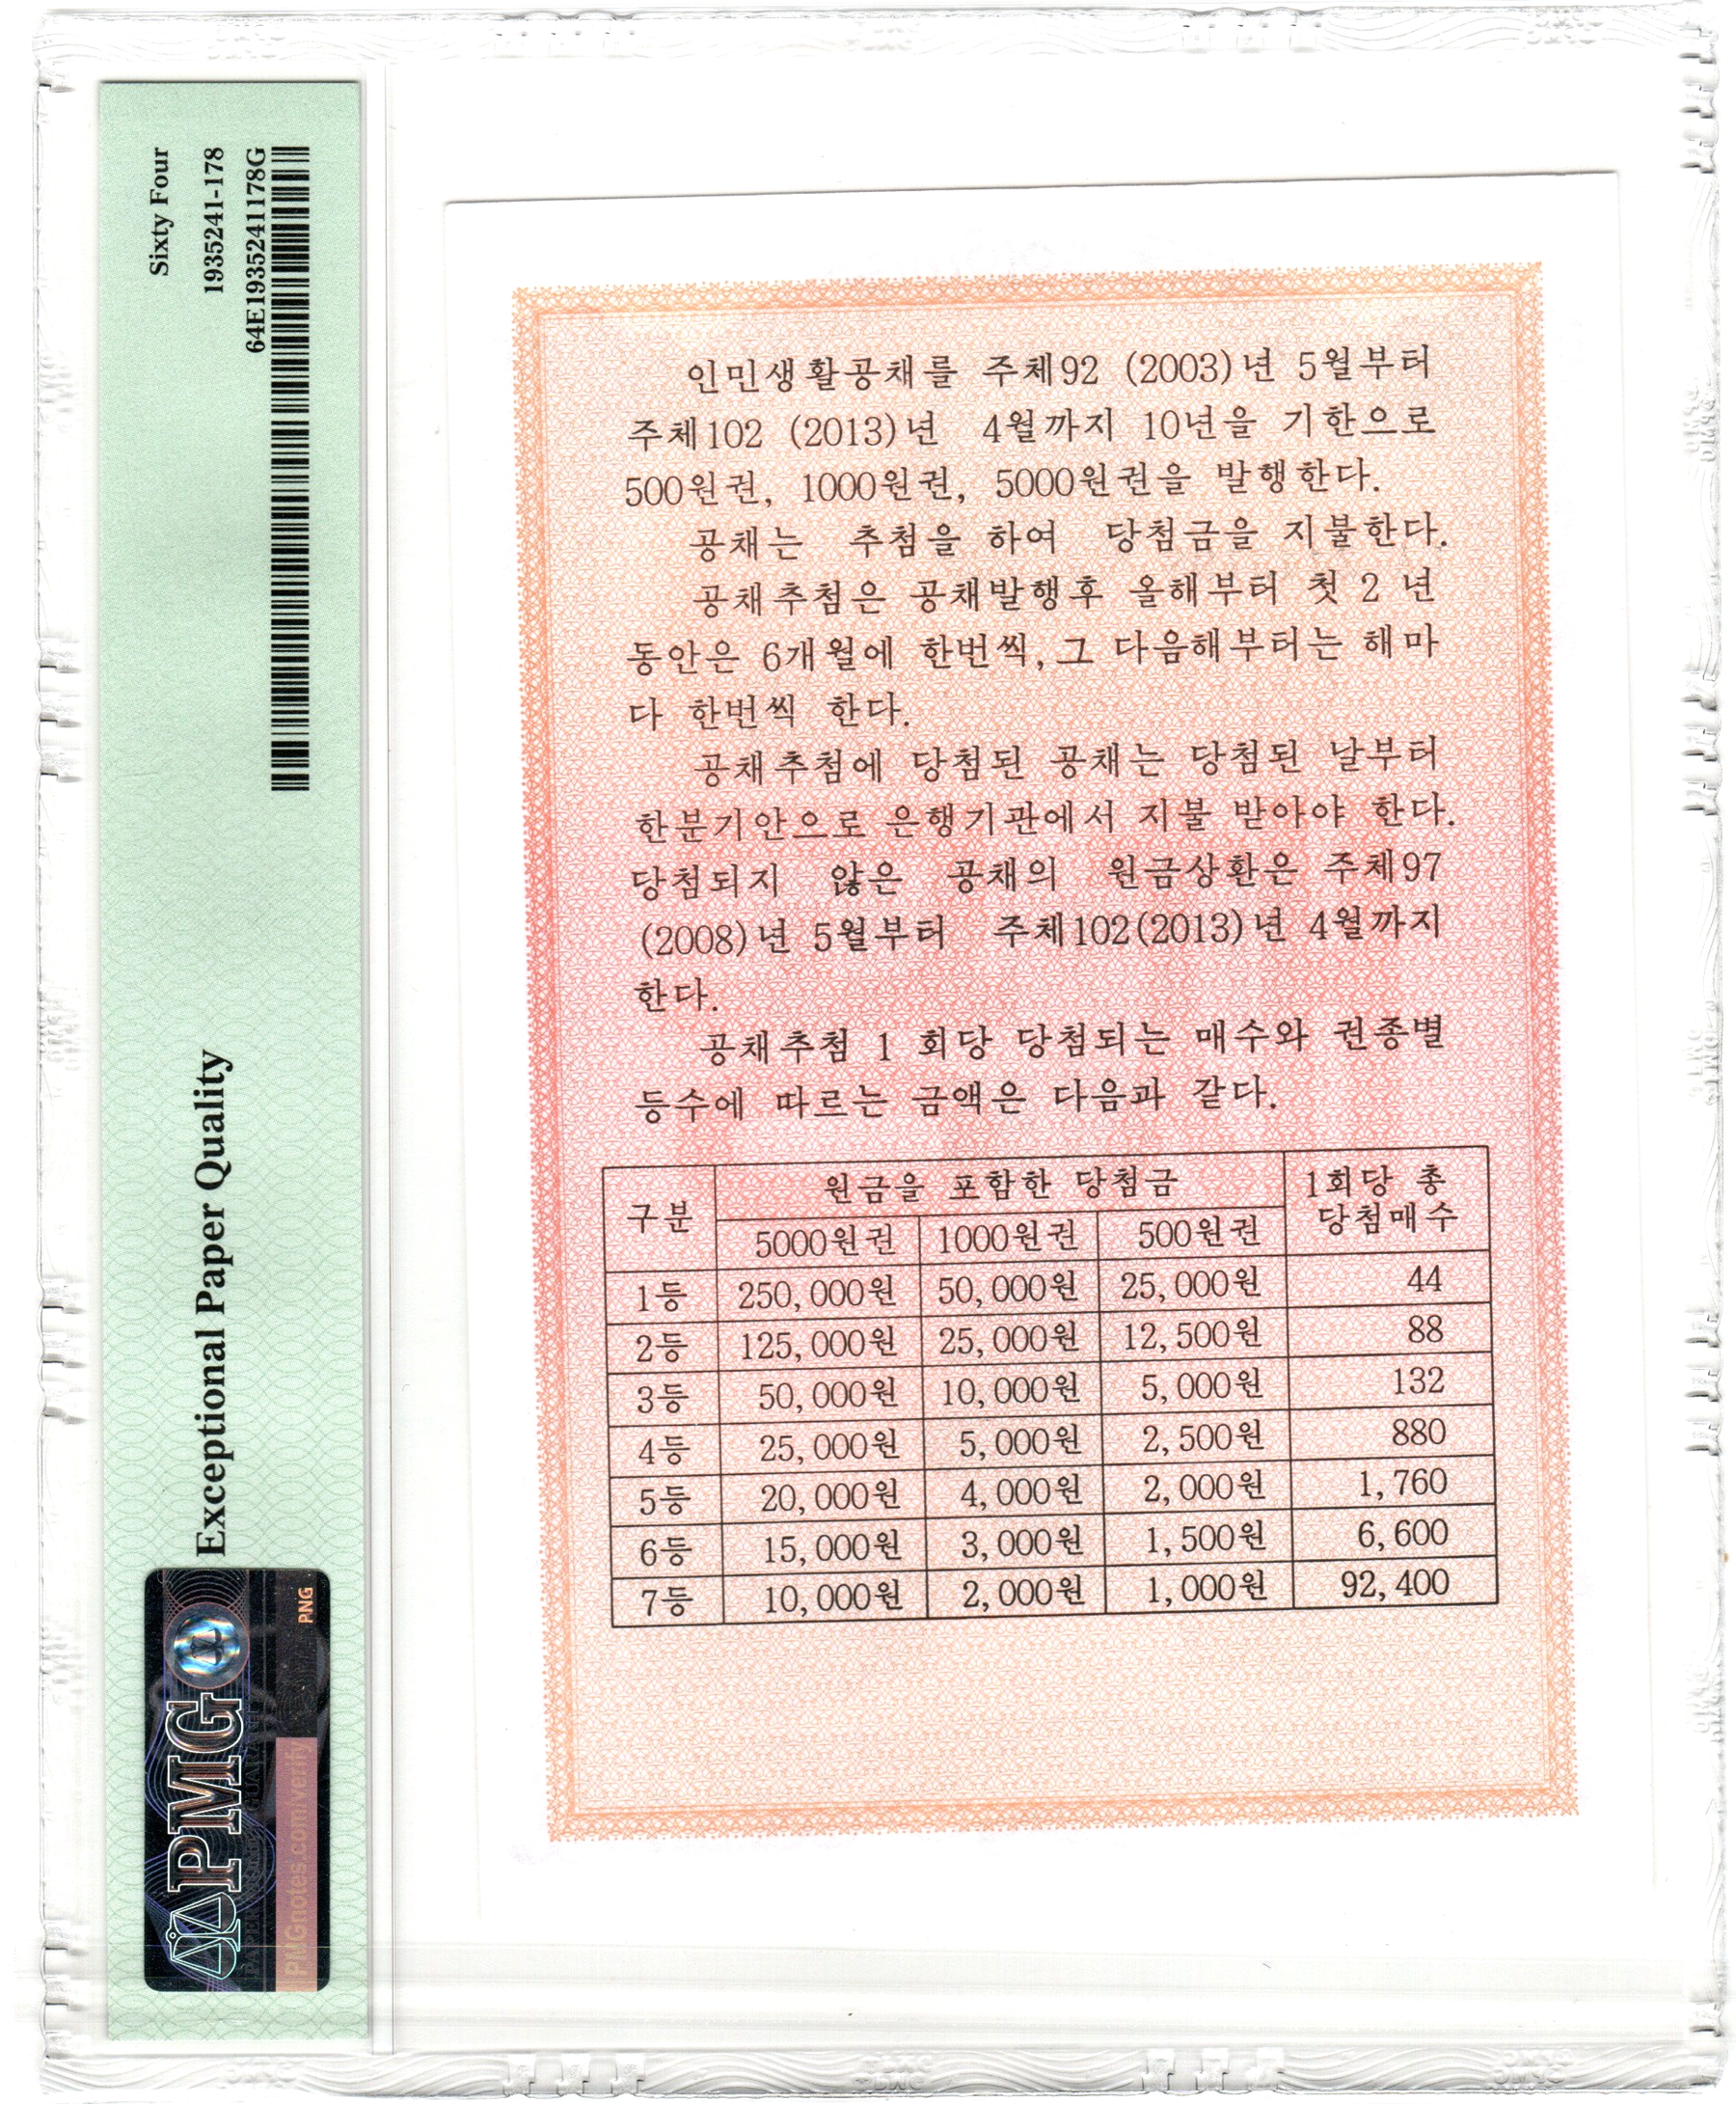 L1260, PMG64, Korea 10 Years Treasury Bond 1000 Wons, 2003